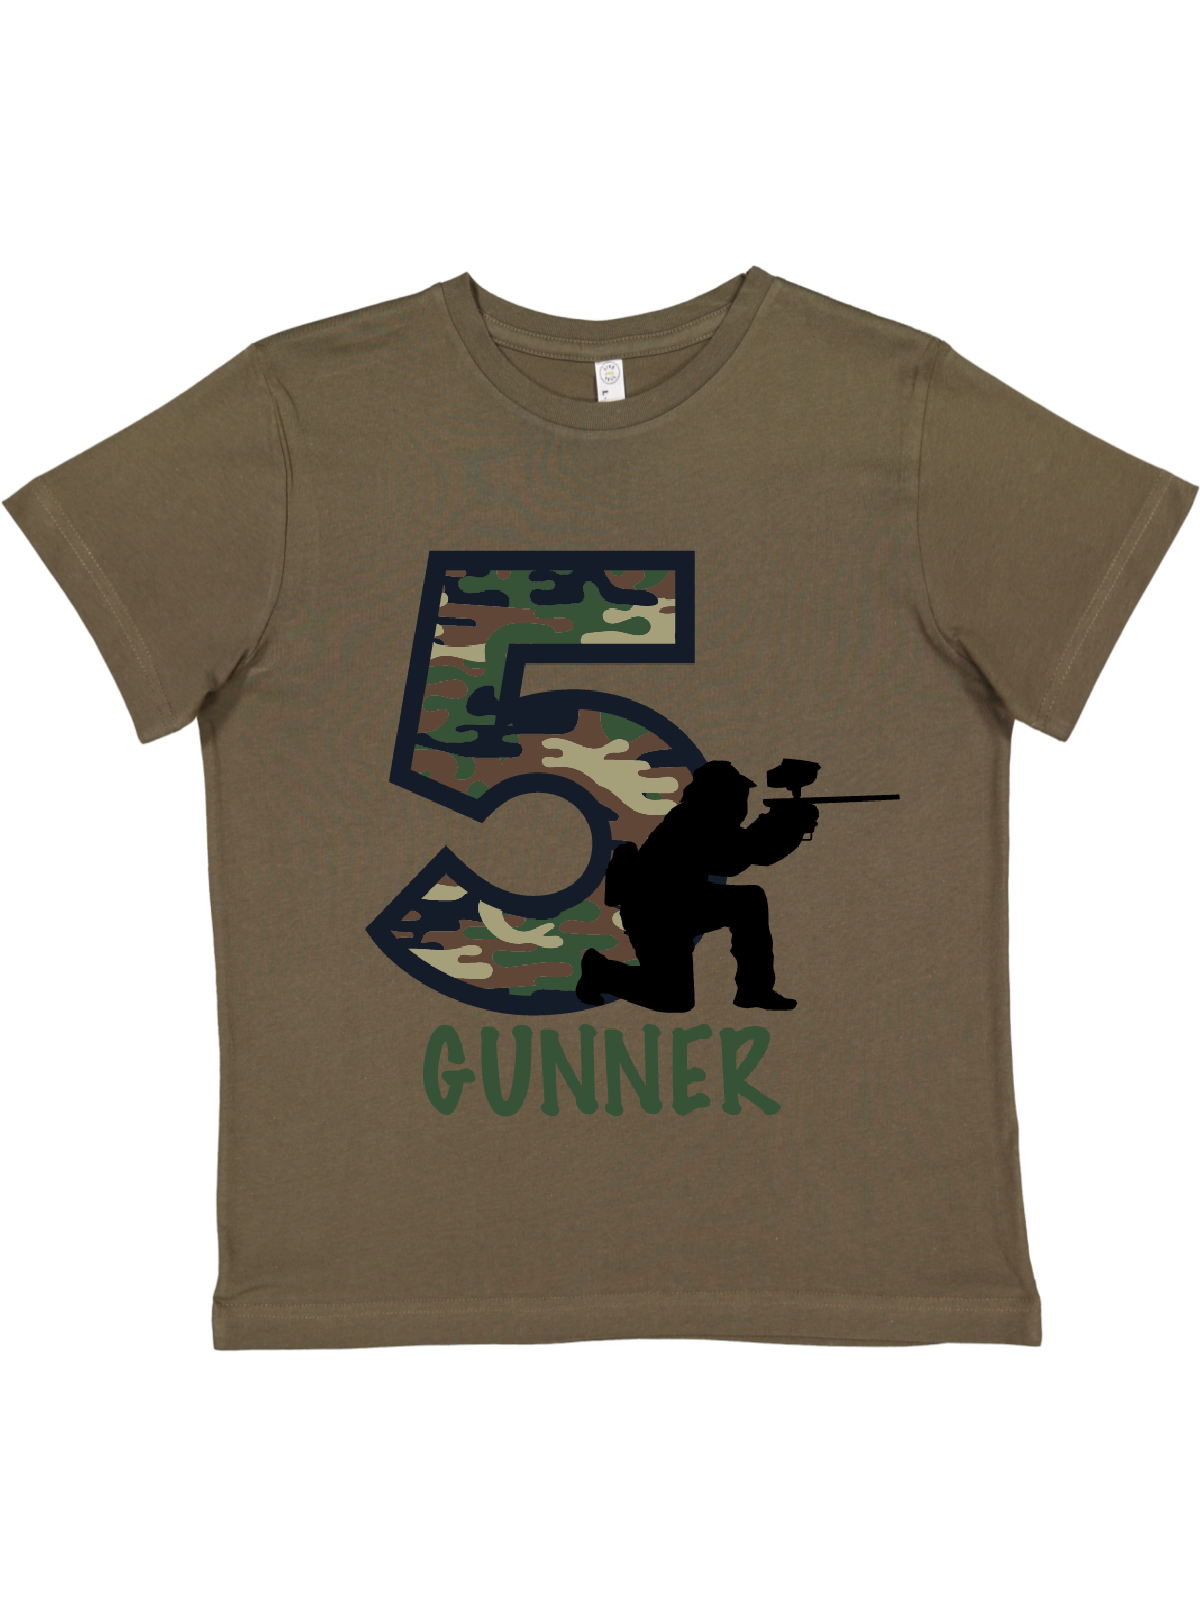 Paintball Shooter Birthday Shirt - Black, Military Green, & Heather Gray